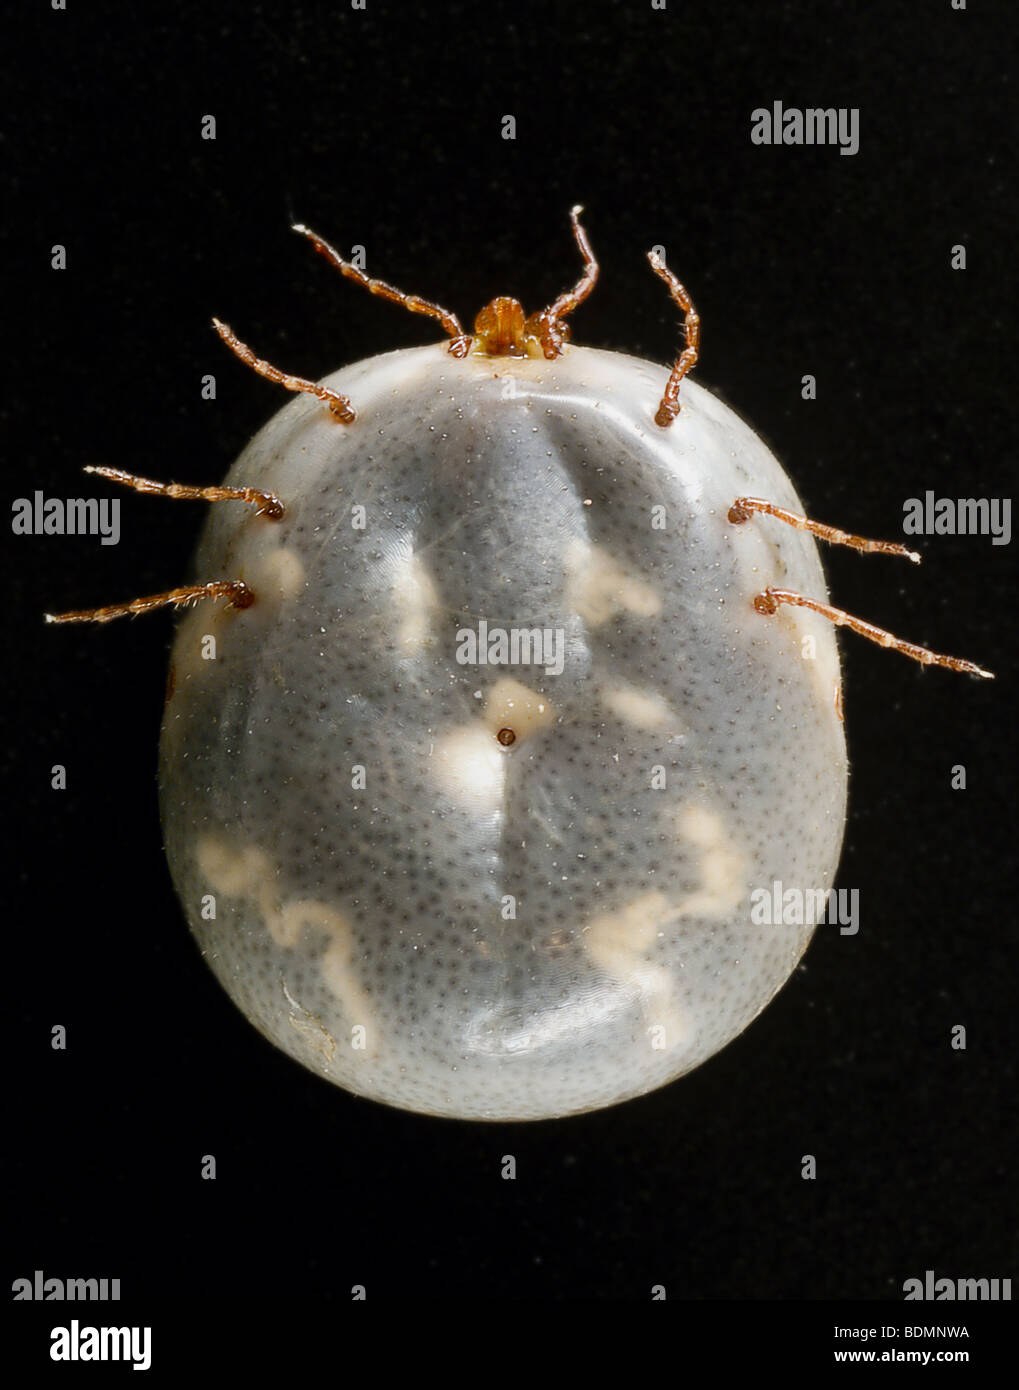 Engorged female 'lone star tick' Amblyomma americanum, ventral view Stock Photo